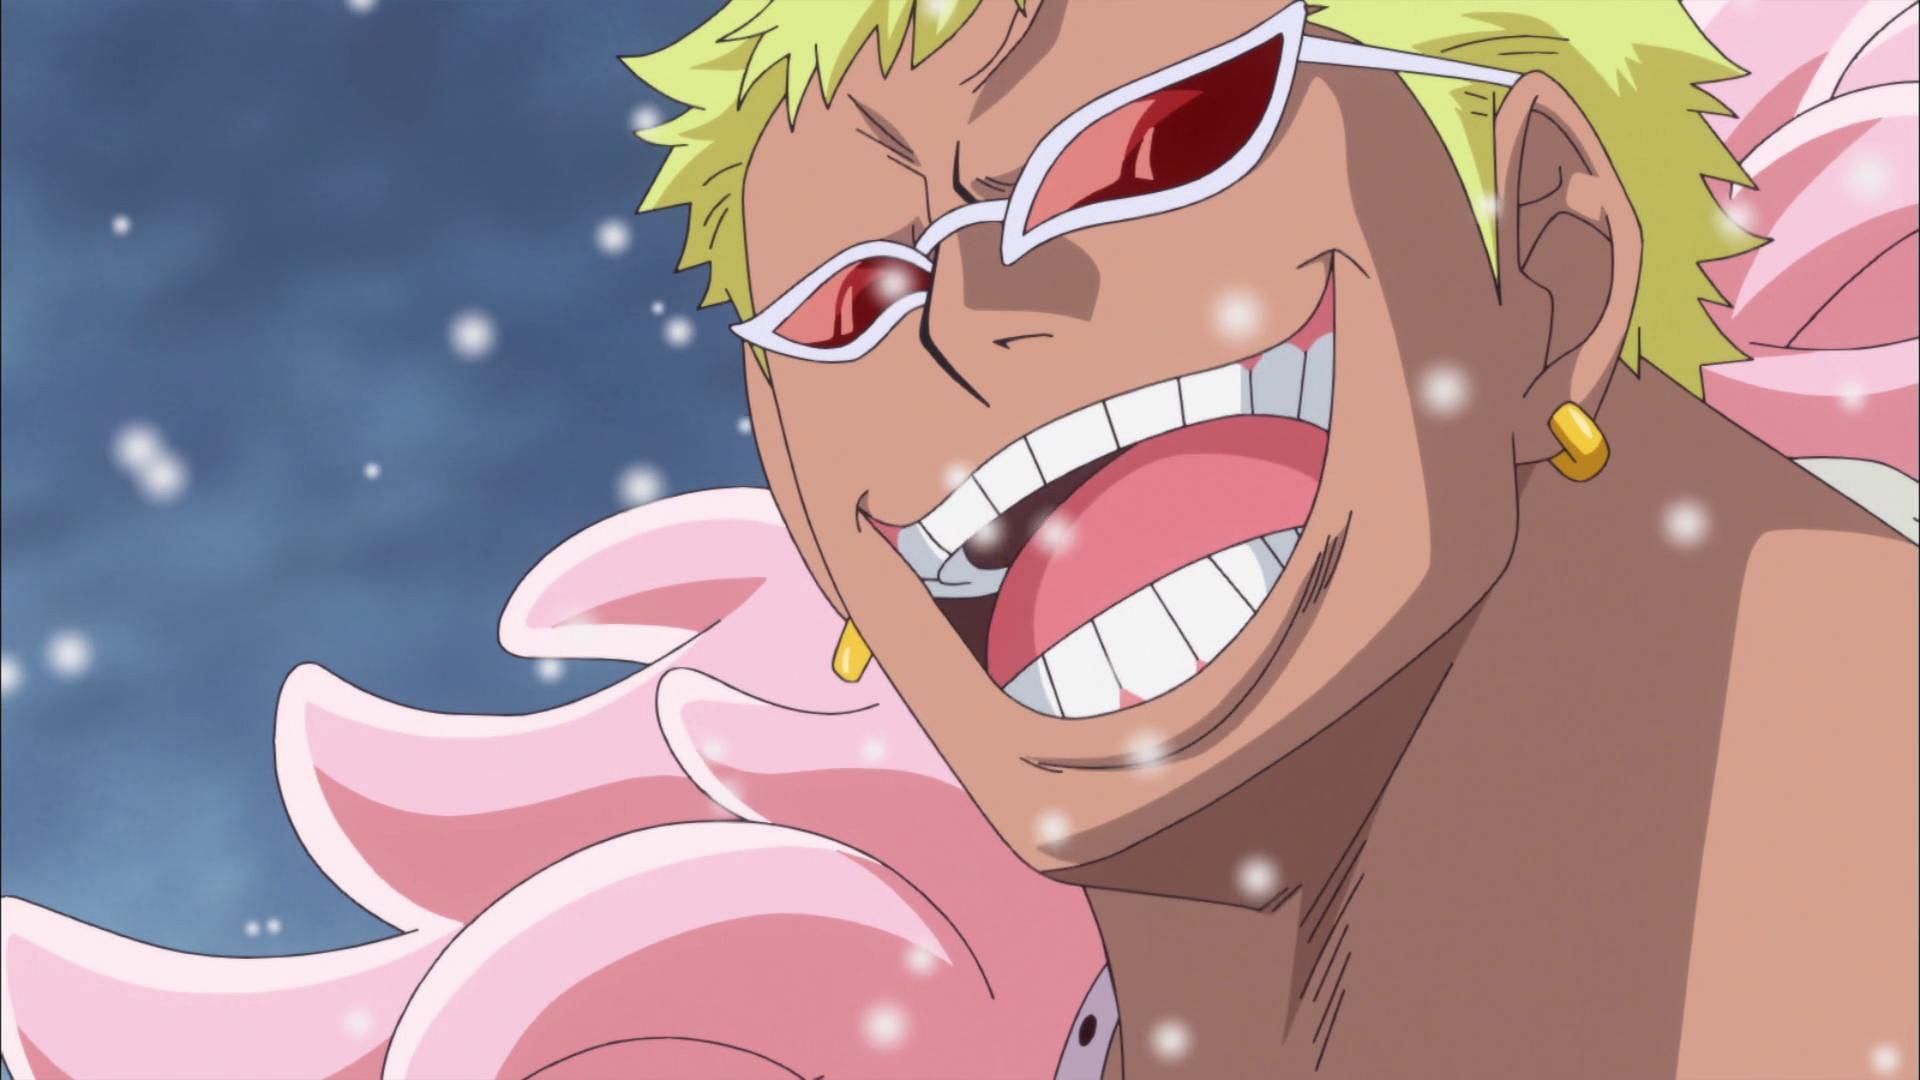 Doflamingo as seen in One Piece (Image via Toei Animation, One Piece)